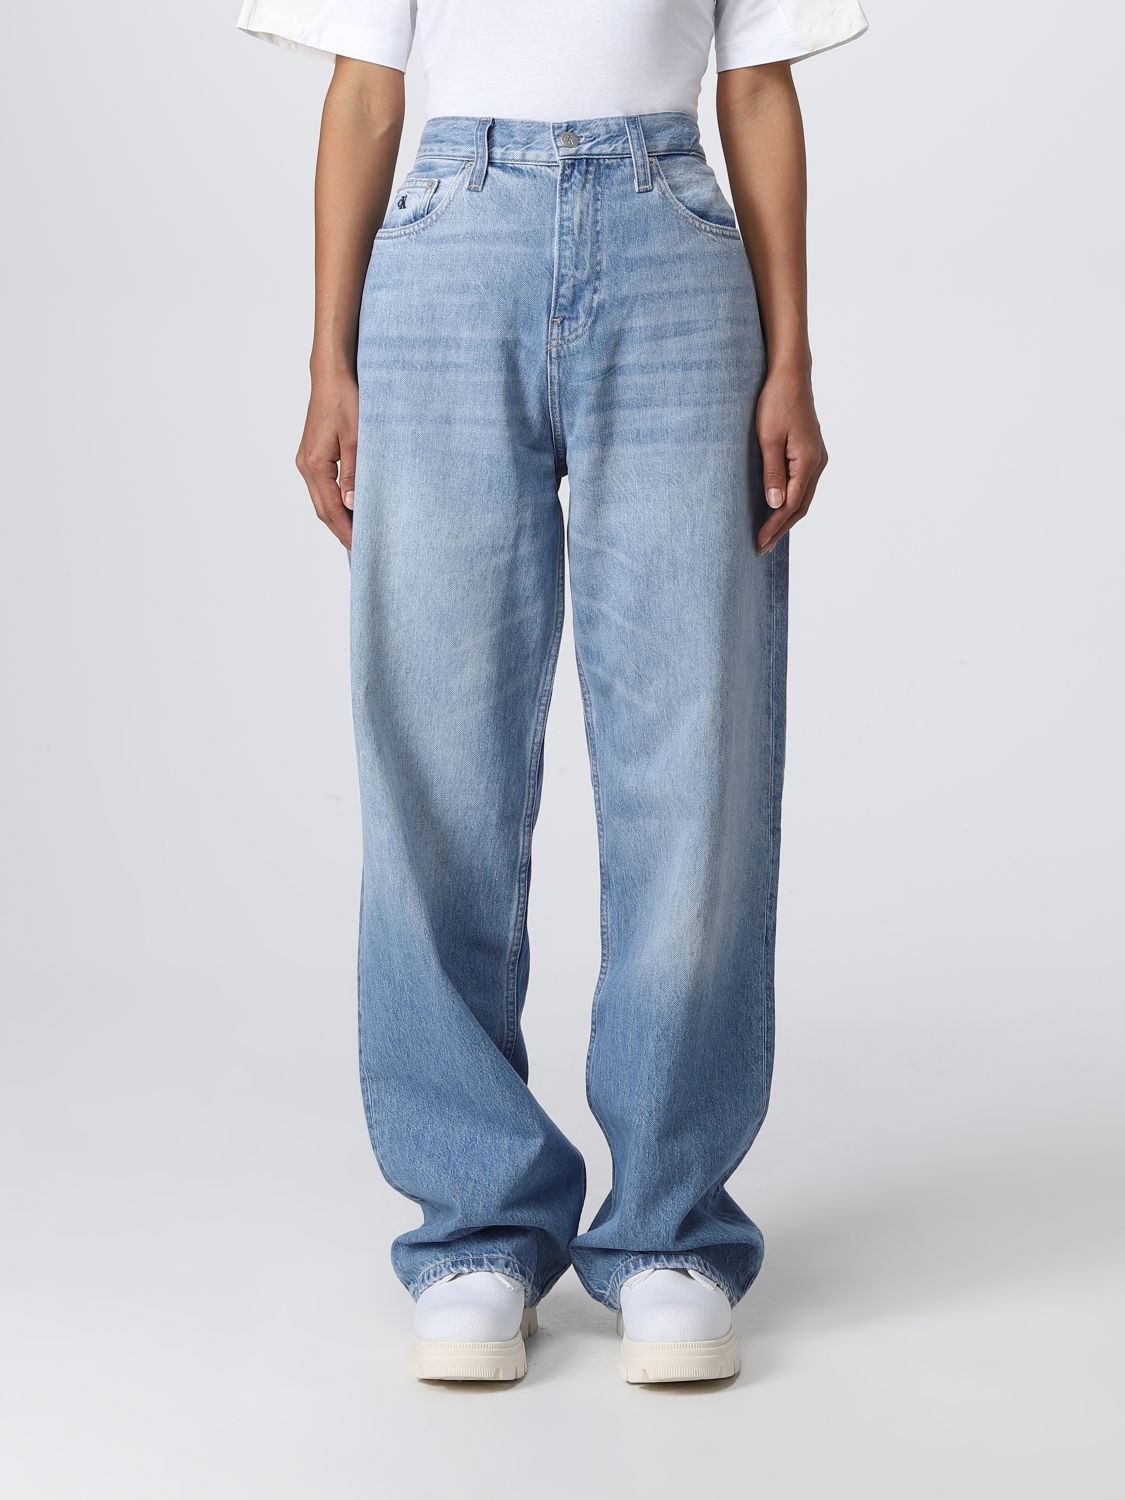 Omleiding Zeeman God CALVIN KLEIN JEANS: jeans for woman - Denim | Calvin Klein Jeans jeans  J20J220252 online on GIGLIO.COM